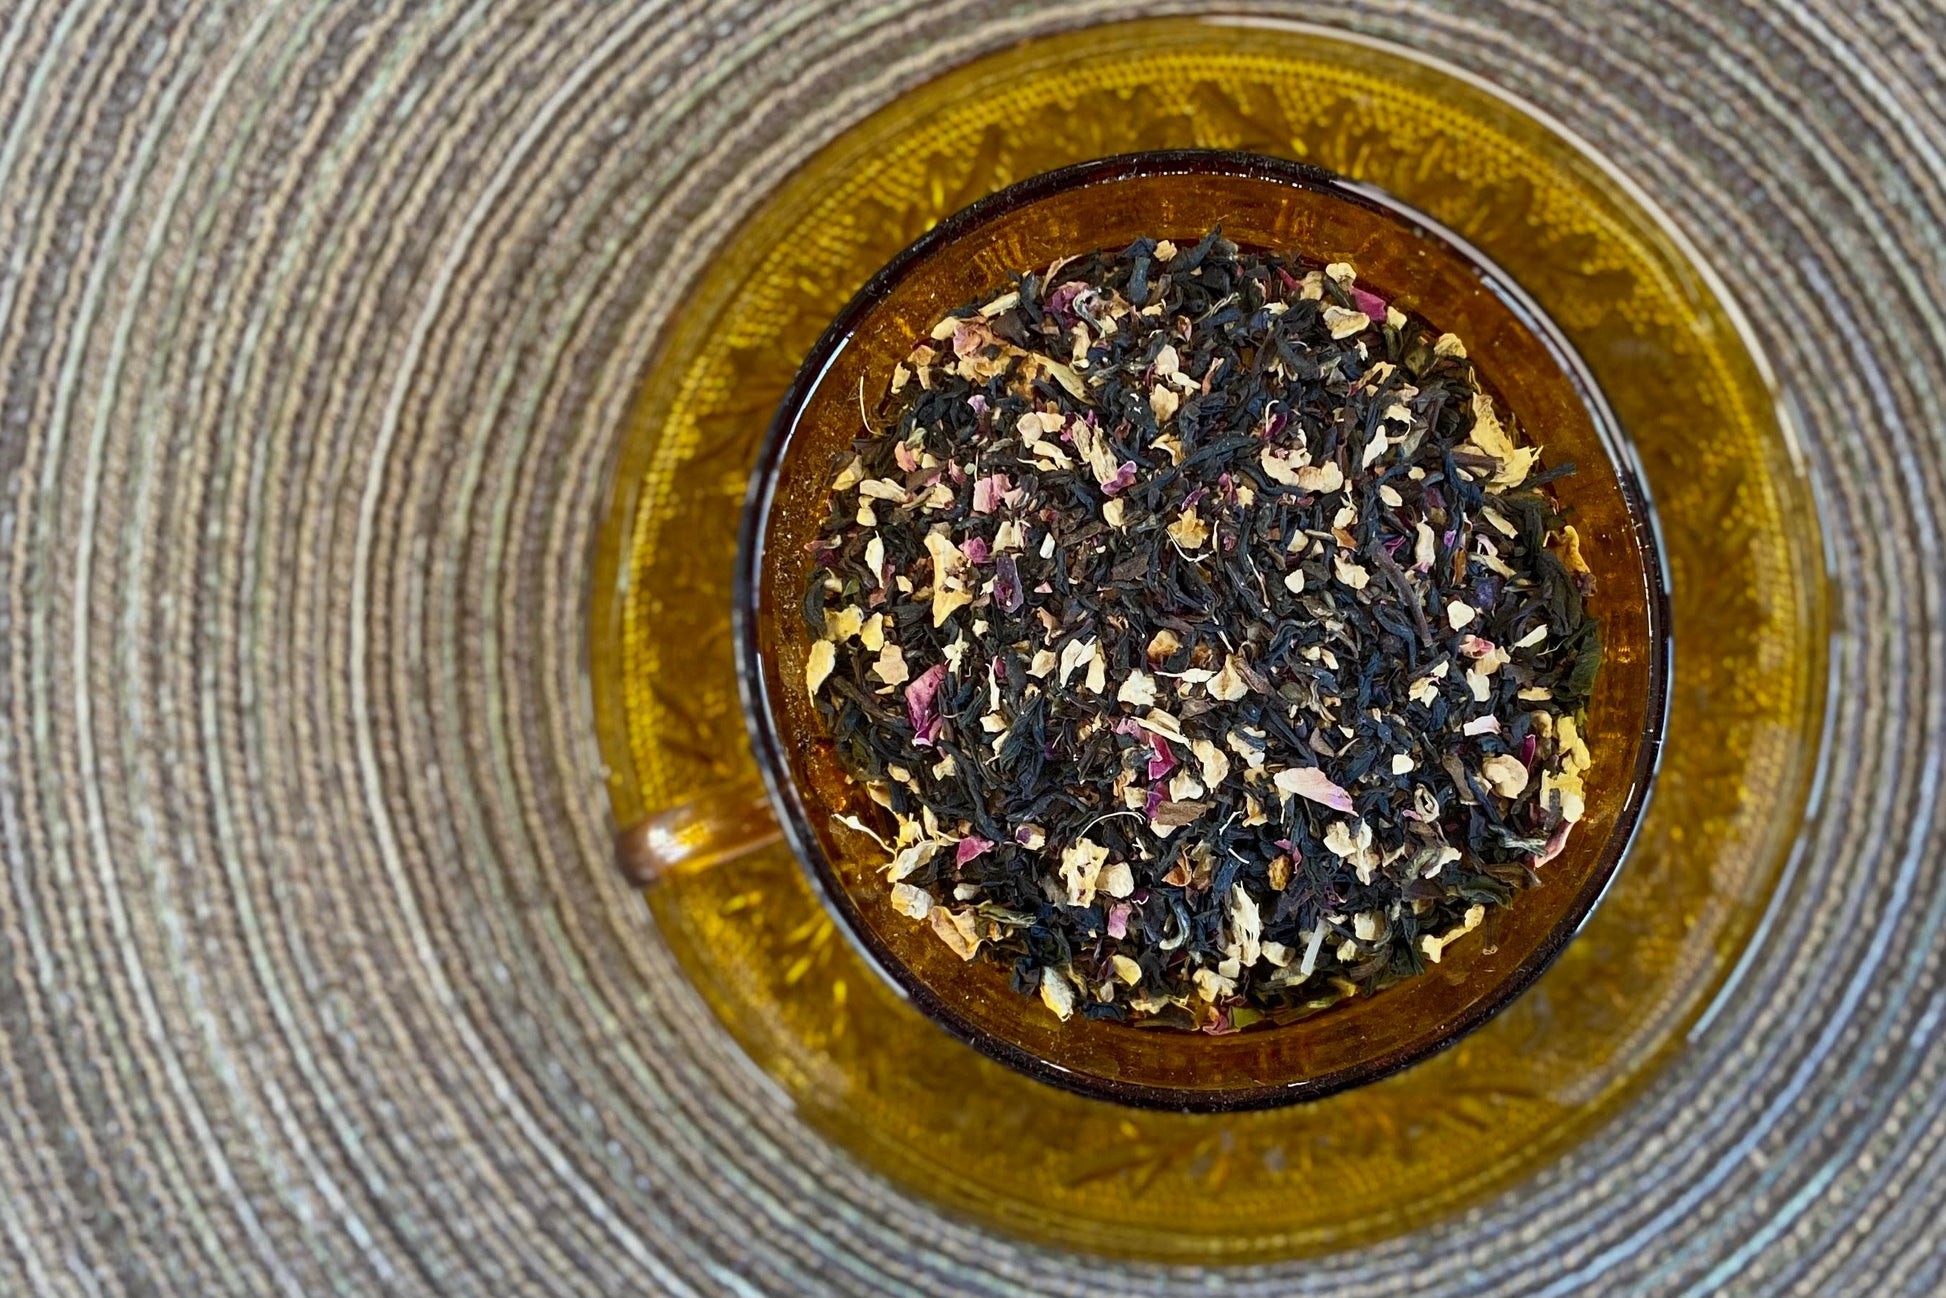 teacup full of black tea with orange and pink botanicals